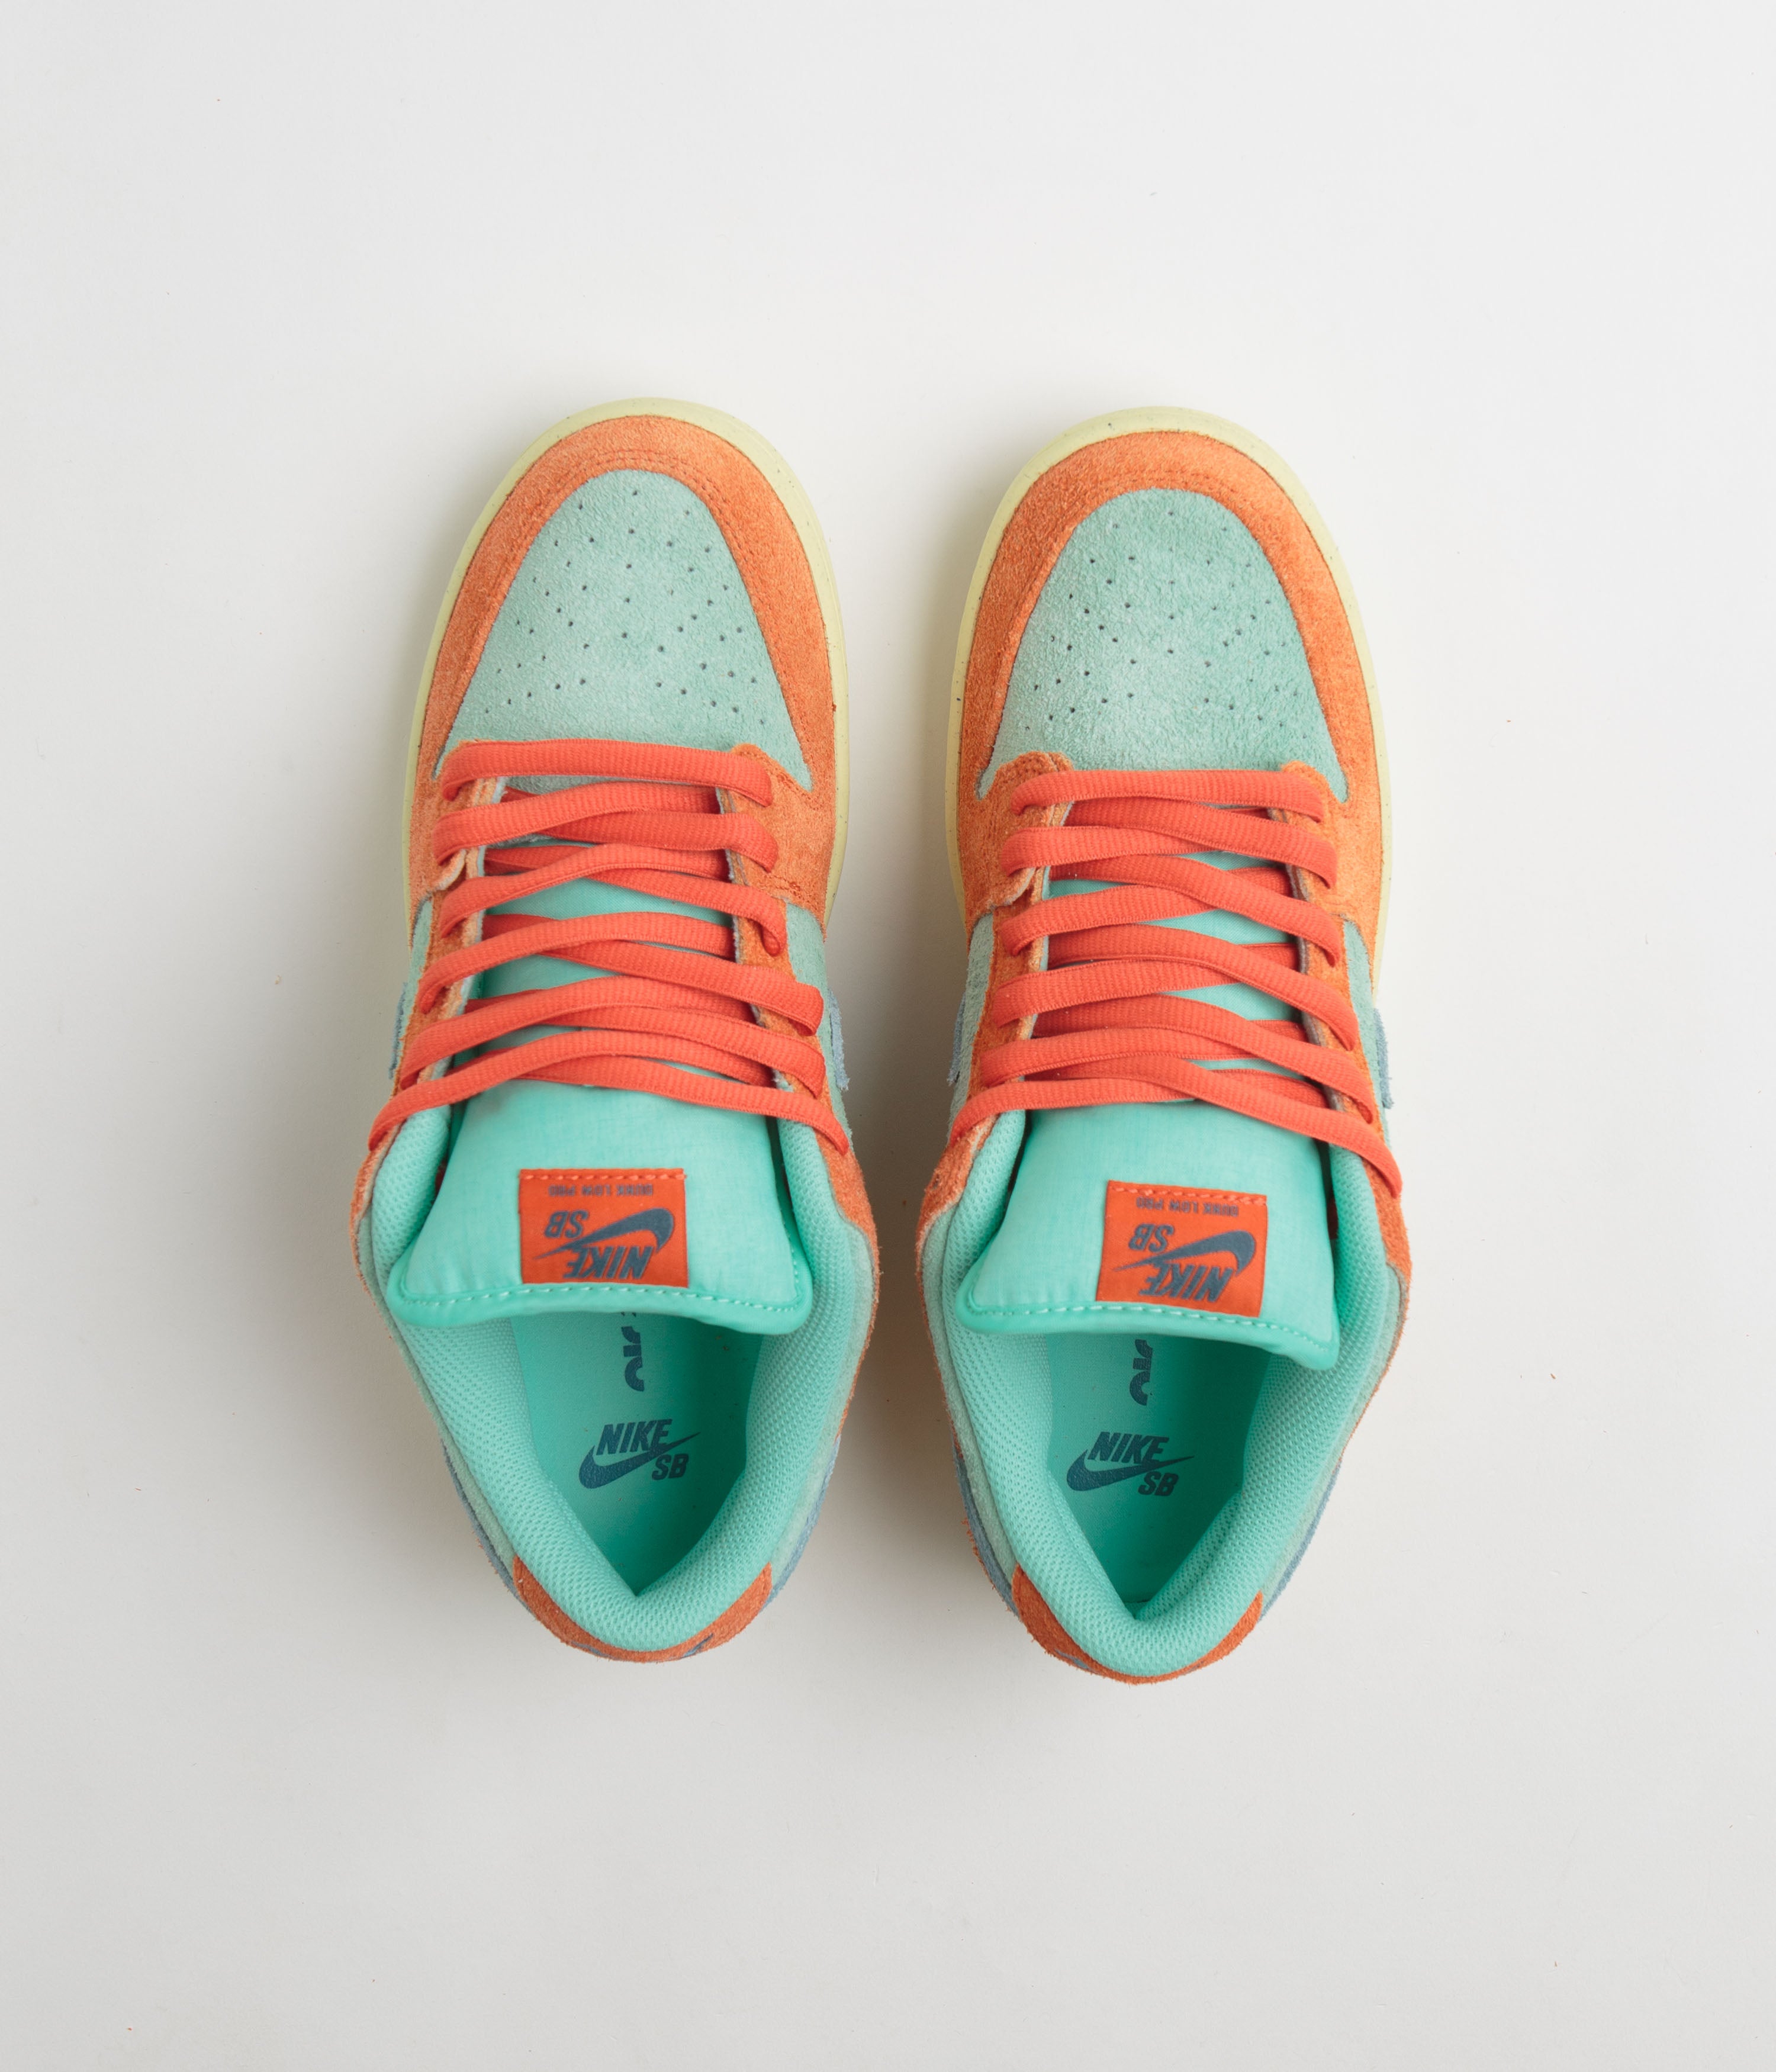 Nike SB Dunk Low Pro Premium Shoes - Orange / Noise Aqua - Emerald